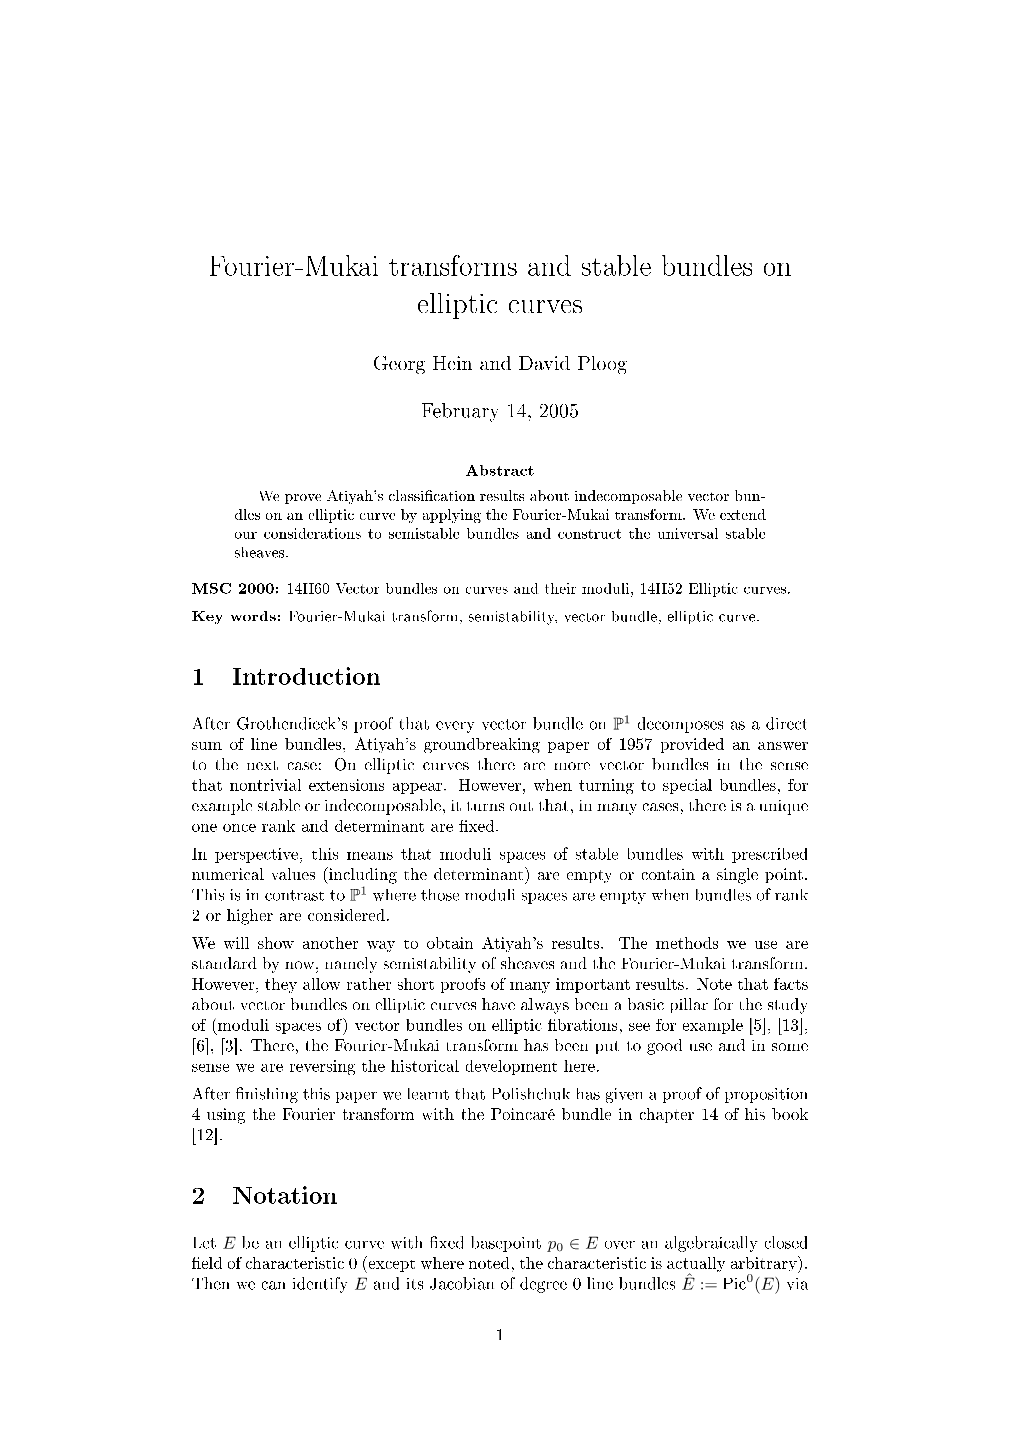 Fourier-Mukai Transforms and Stable Bundles on Elliptic Curves